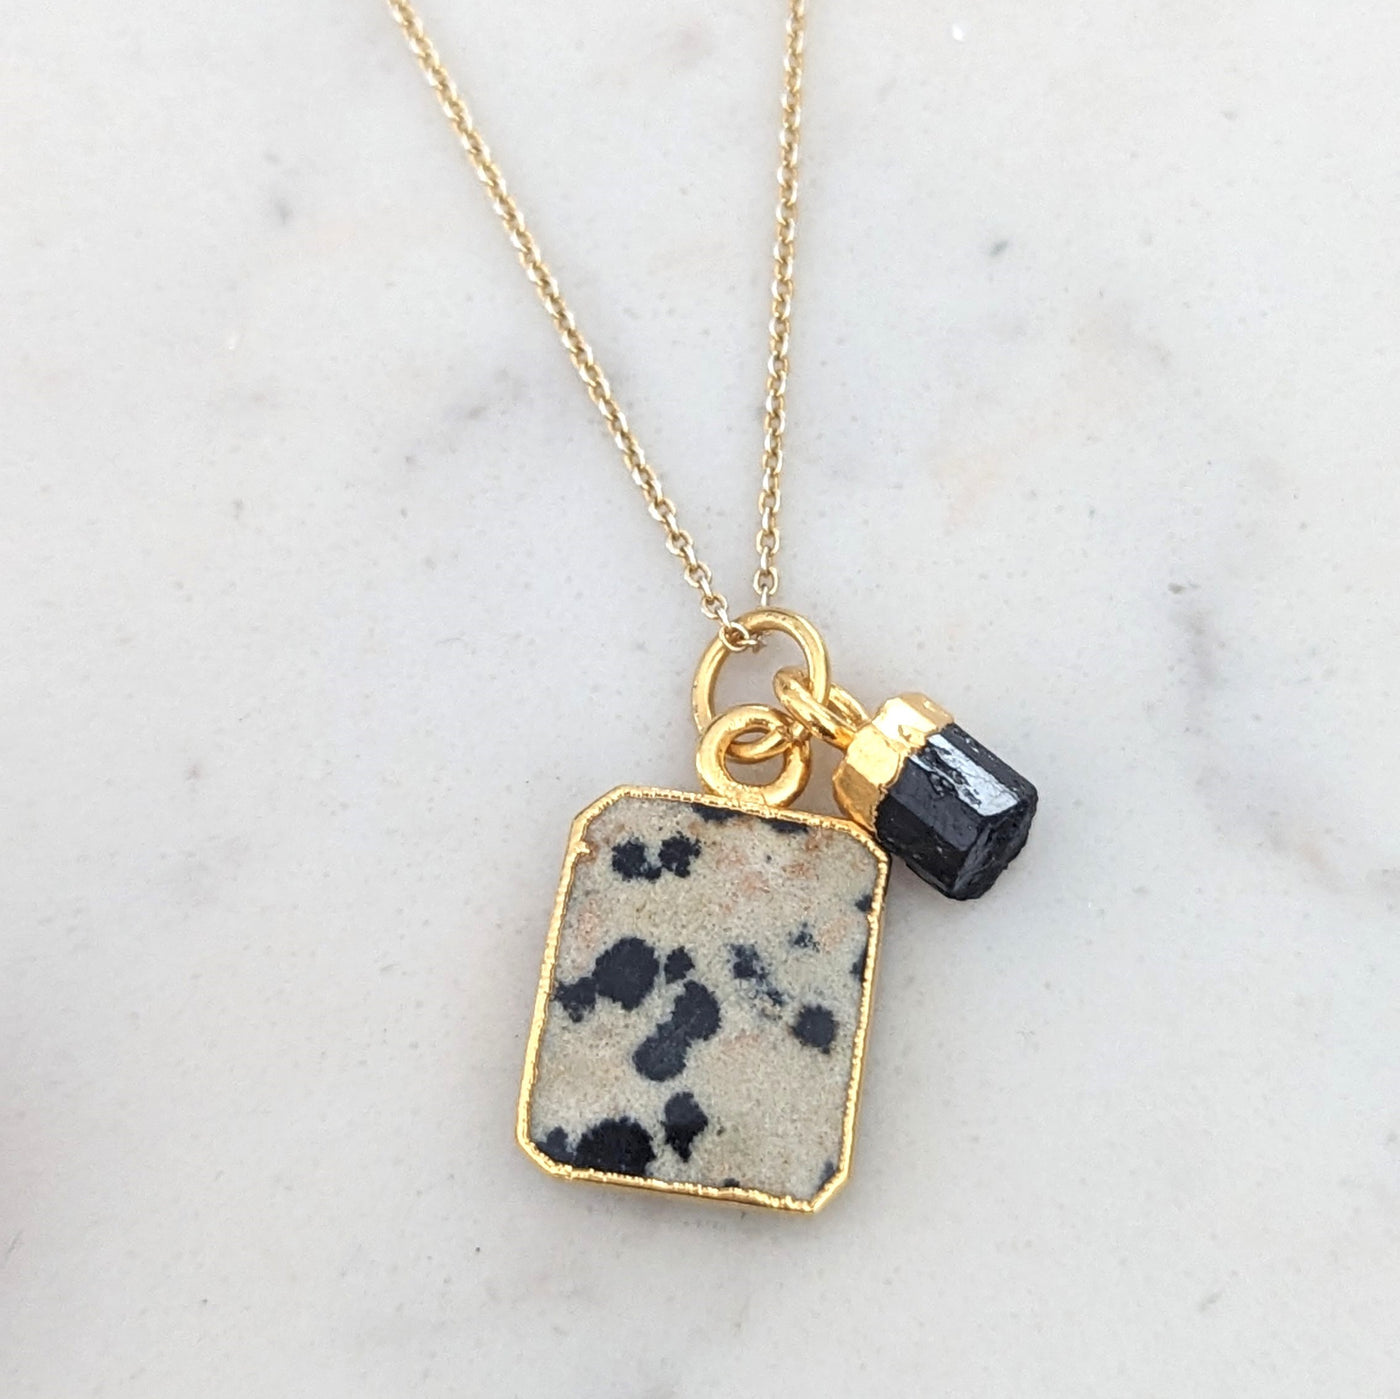 Dalmatian Jasper and Black Tourmaline gold plated necklace